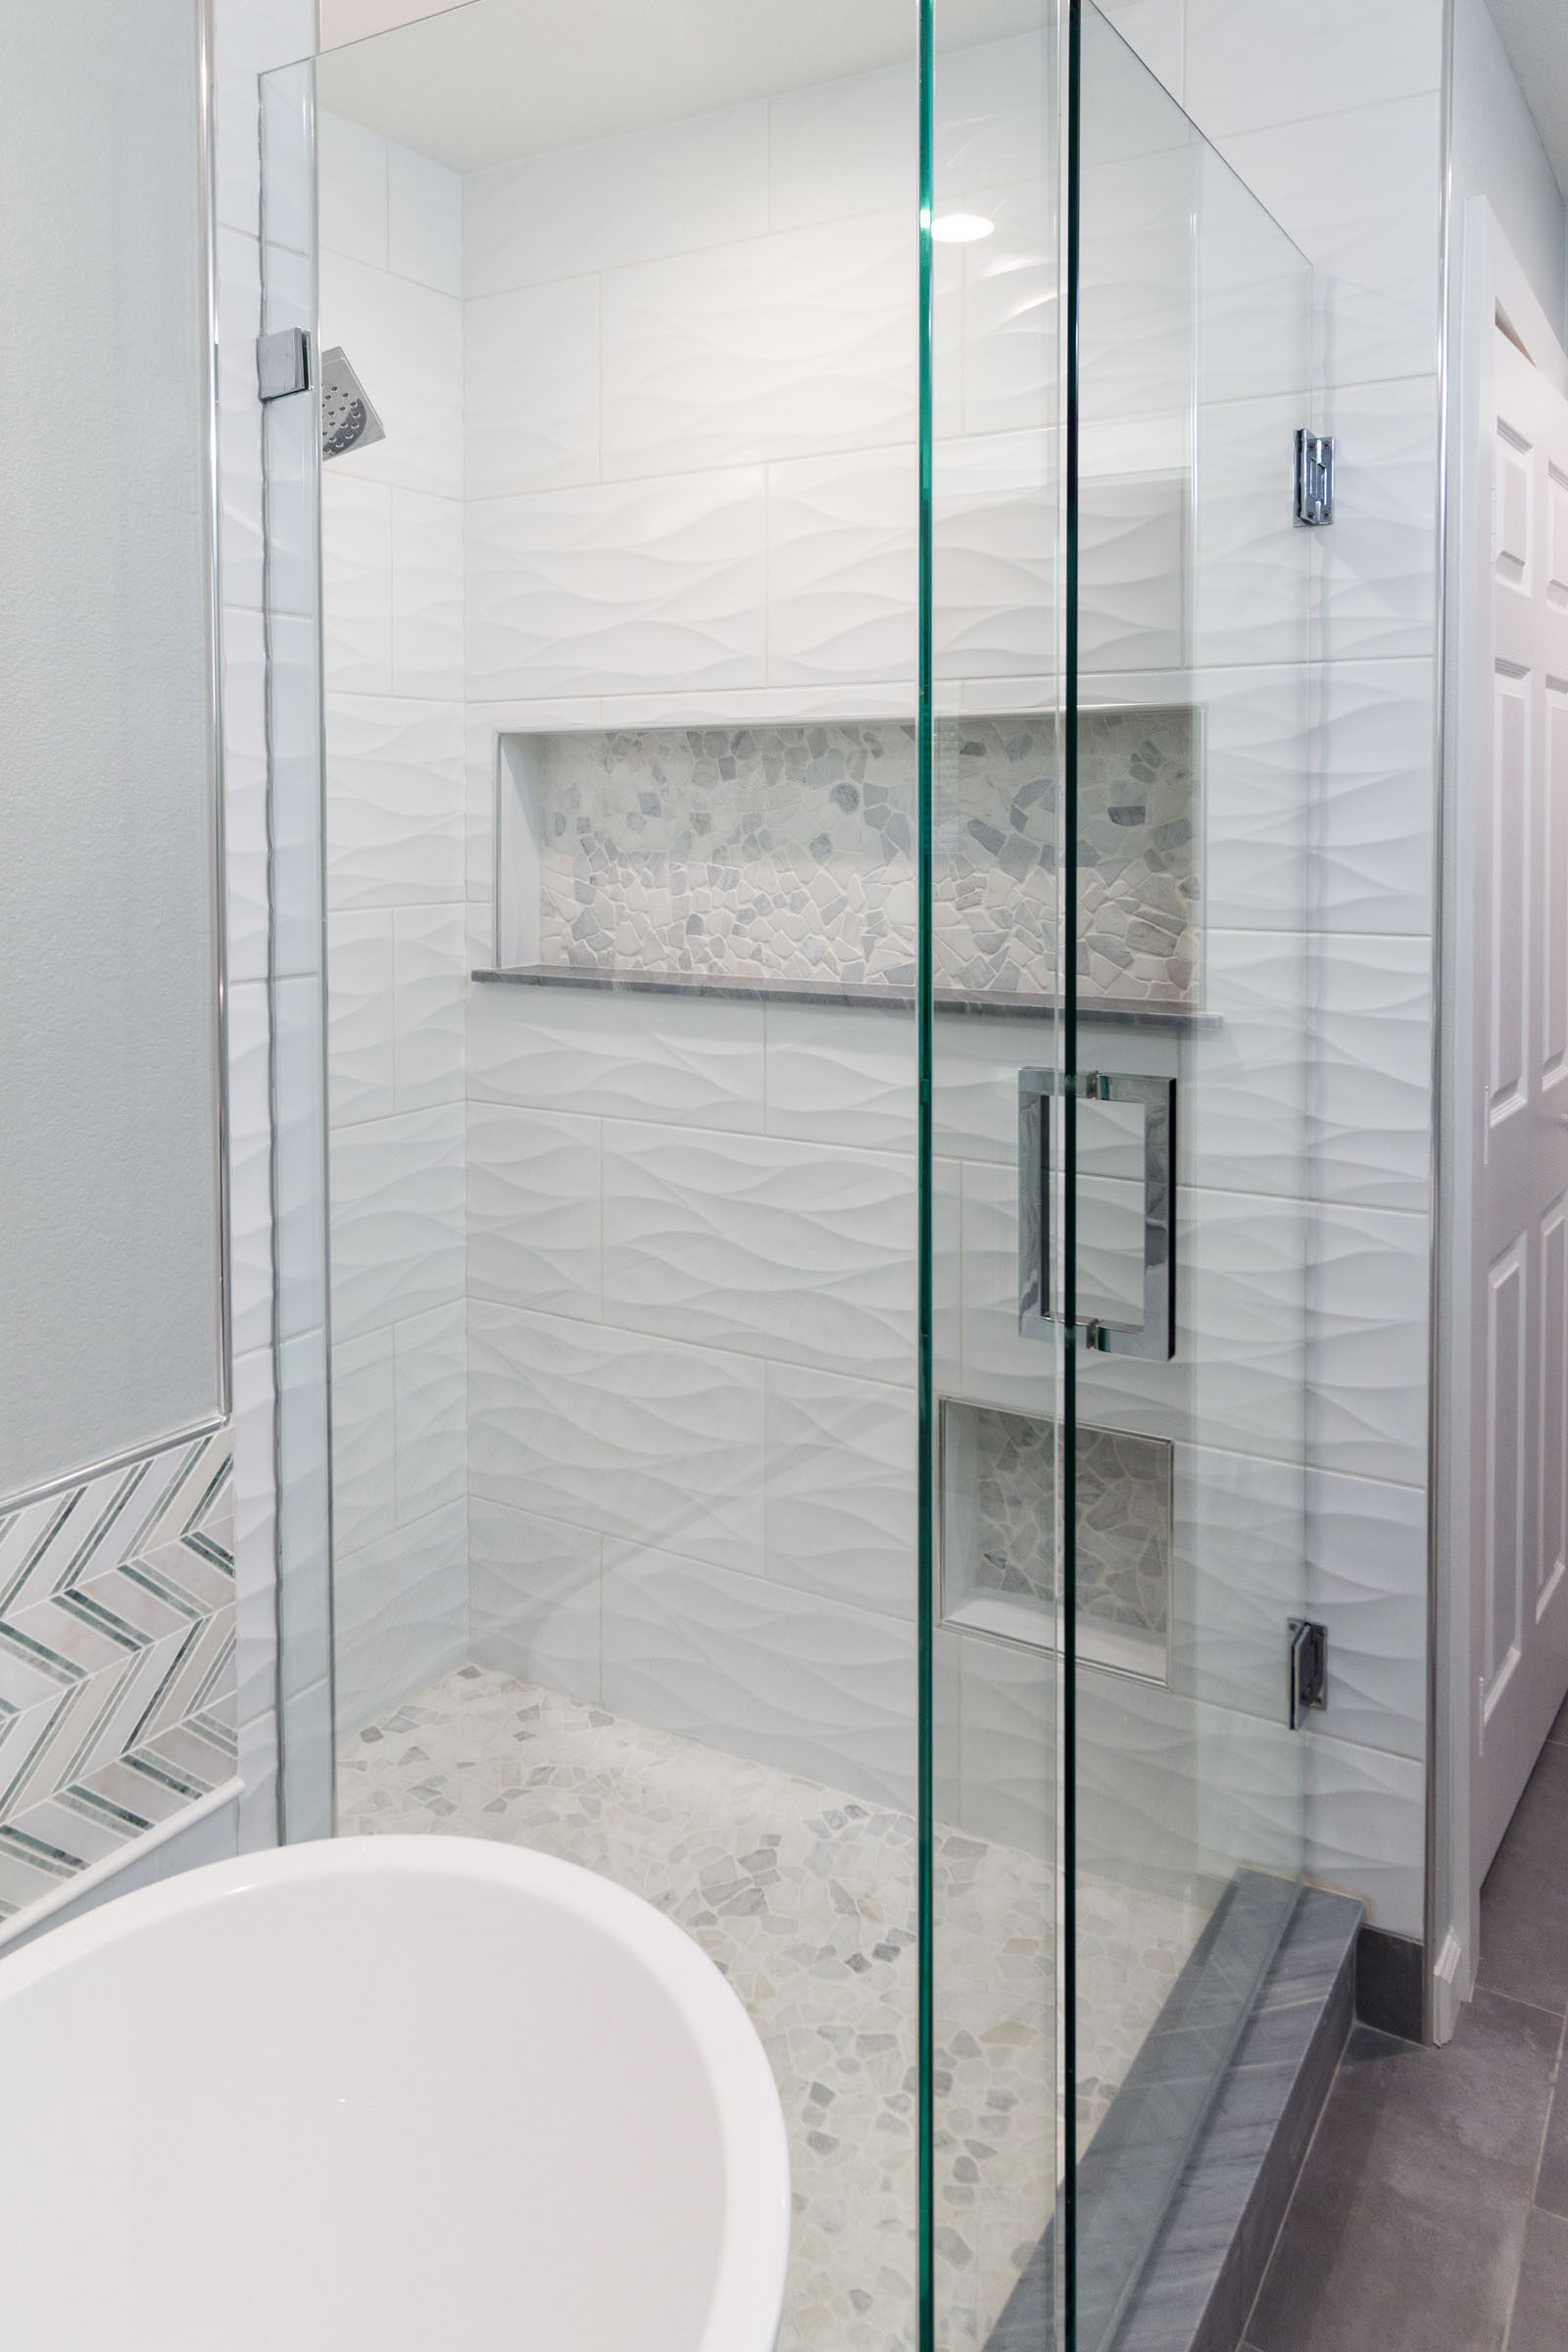 White and grey bathroom remodel, classic tile variations, pedestal tub, walkin shower